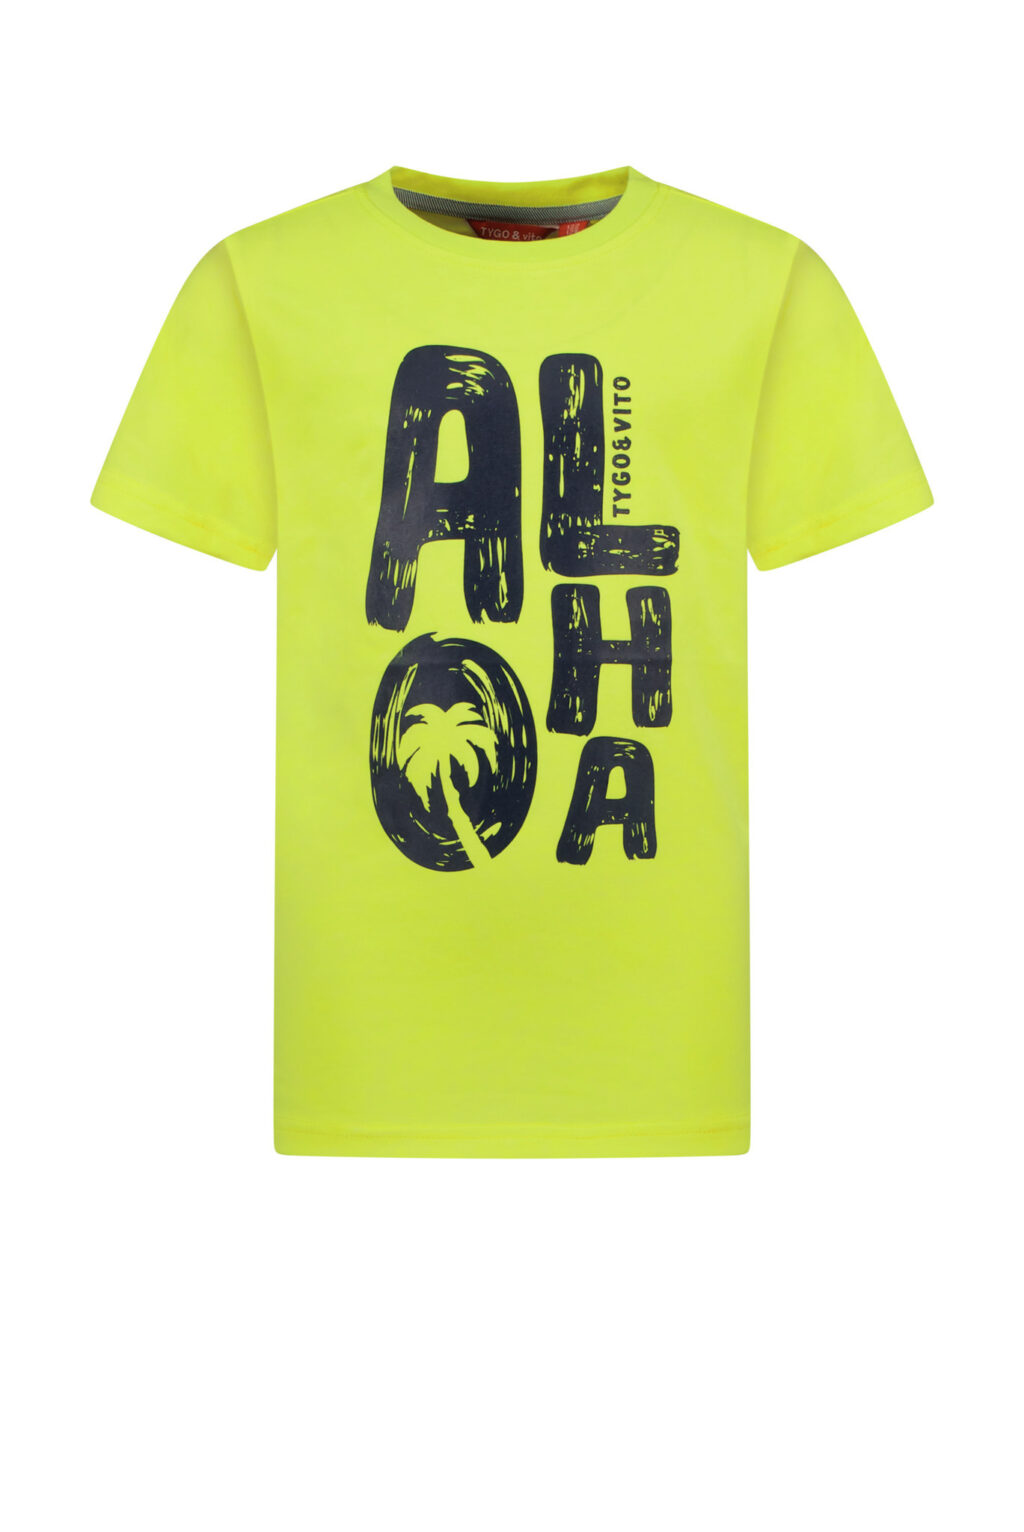 Tygo & Vito Jongens t-shirt neon Aloha - Safety geel ~ Spinze.nl